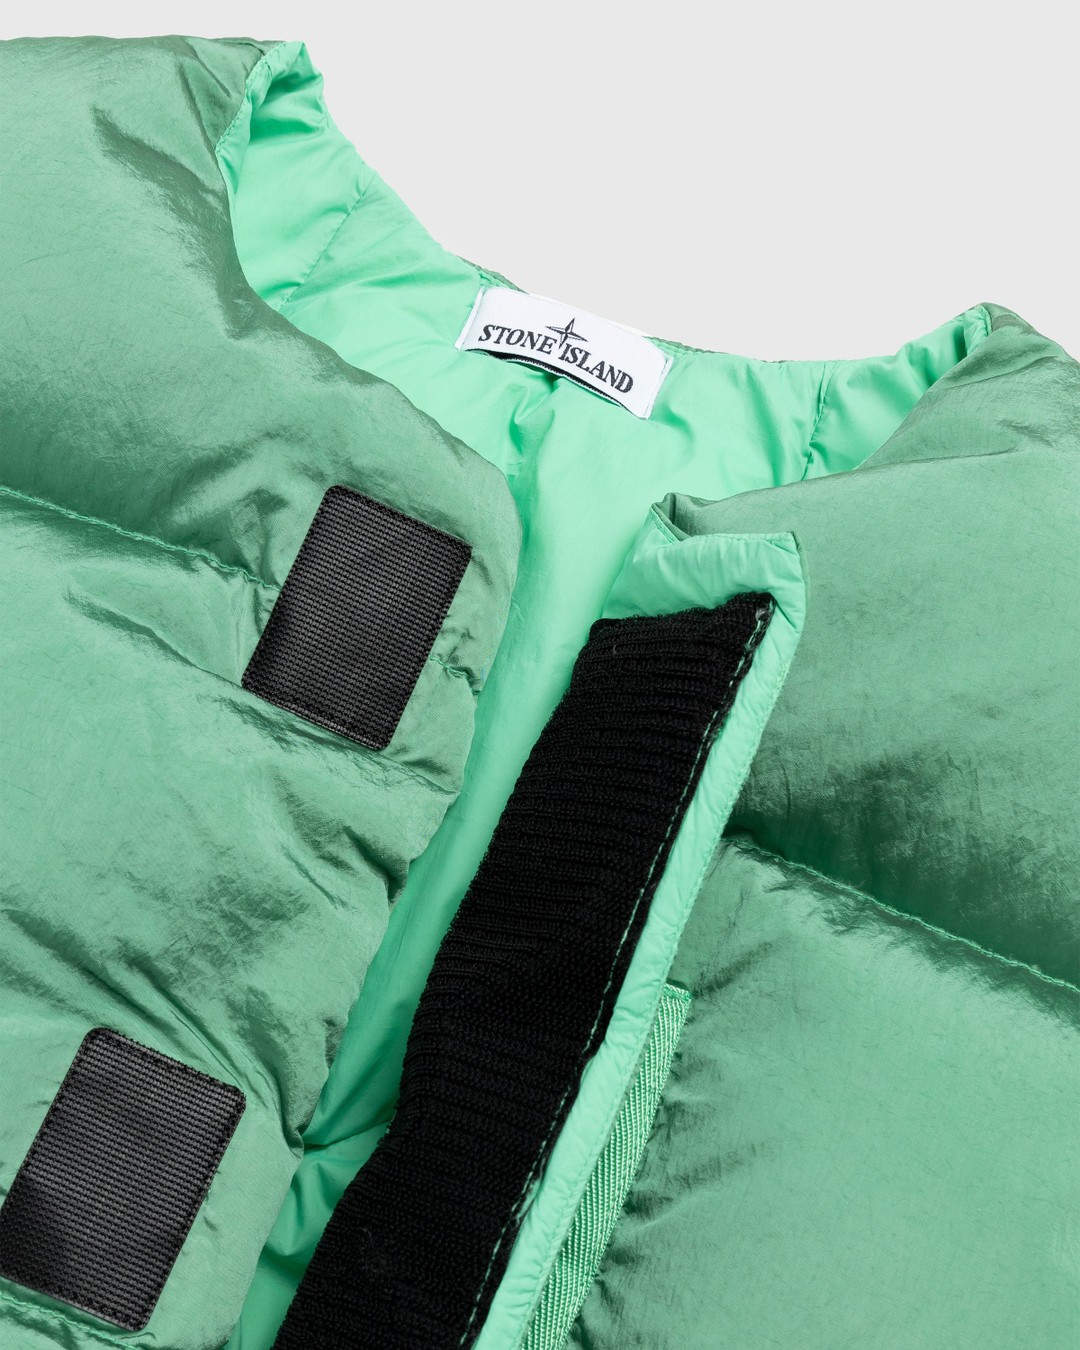 Stone Island – Nylon Metal Down Vest Light Green - Outerwear - Green - Image 3